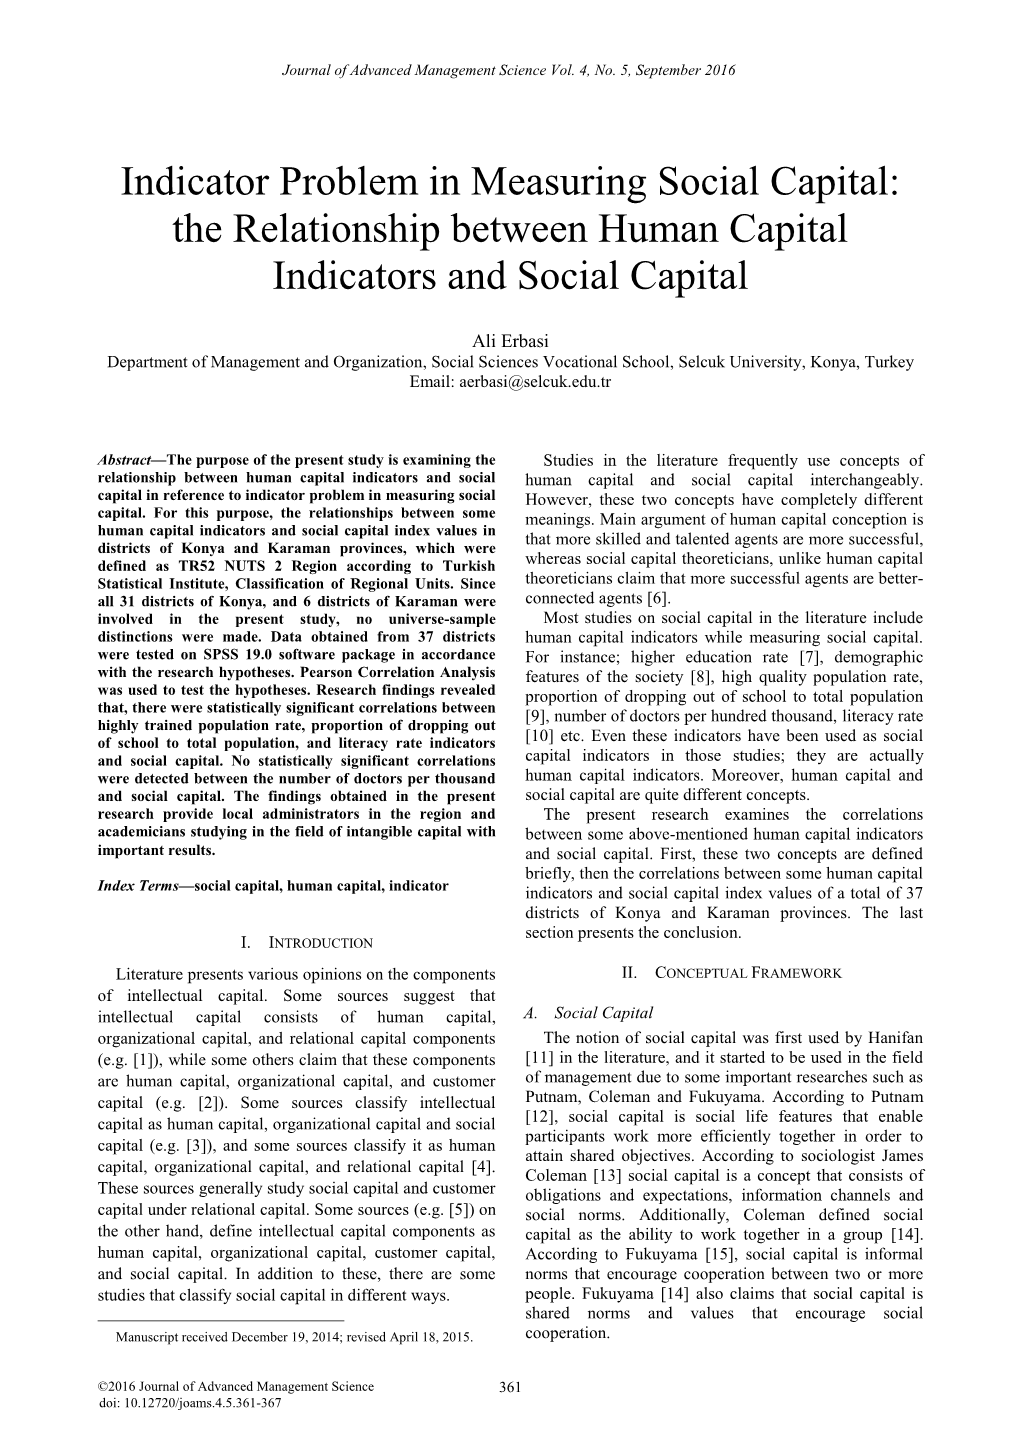 Indicator Problem in Measuring Social Capital: the Relationship Between Human Capital Indicators and Social Capital